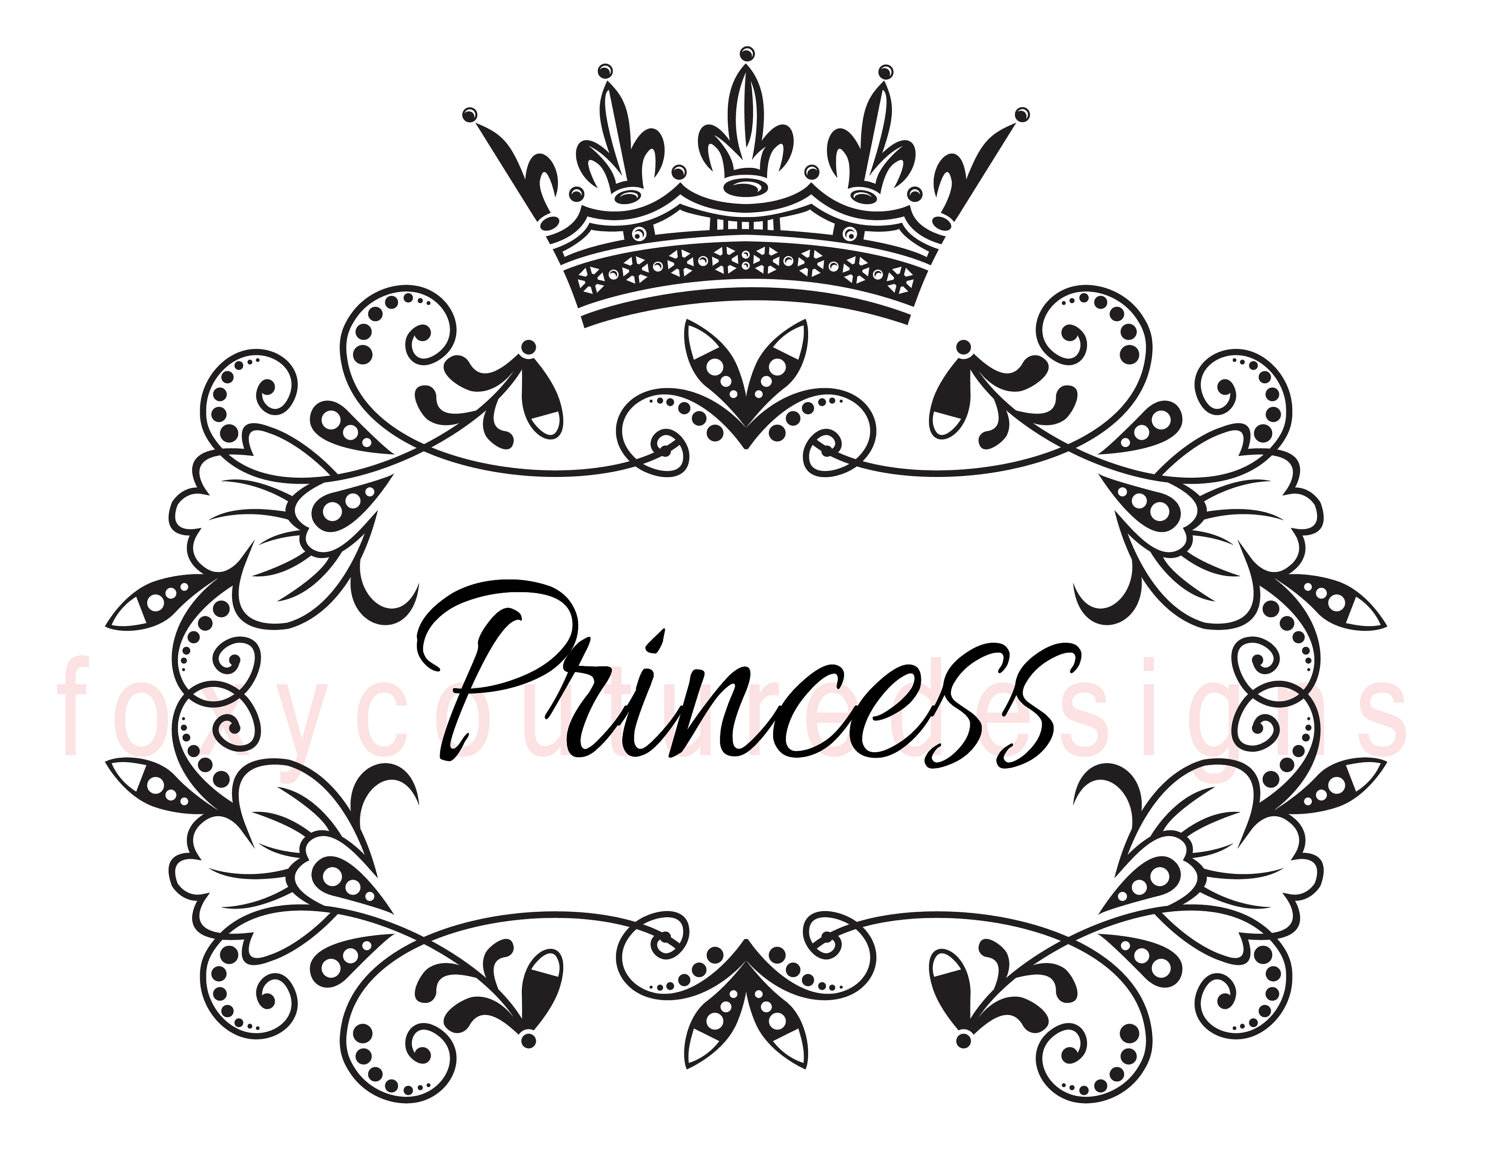 Princess Crown Coloring Page - Auromas.com